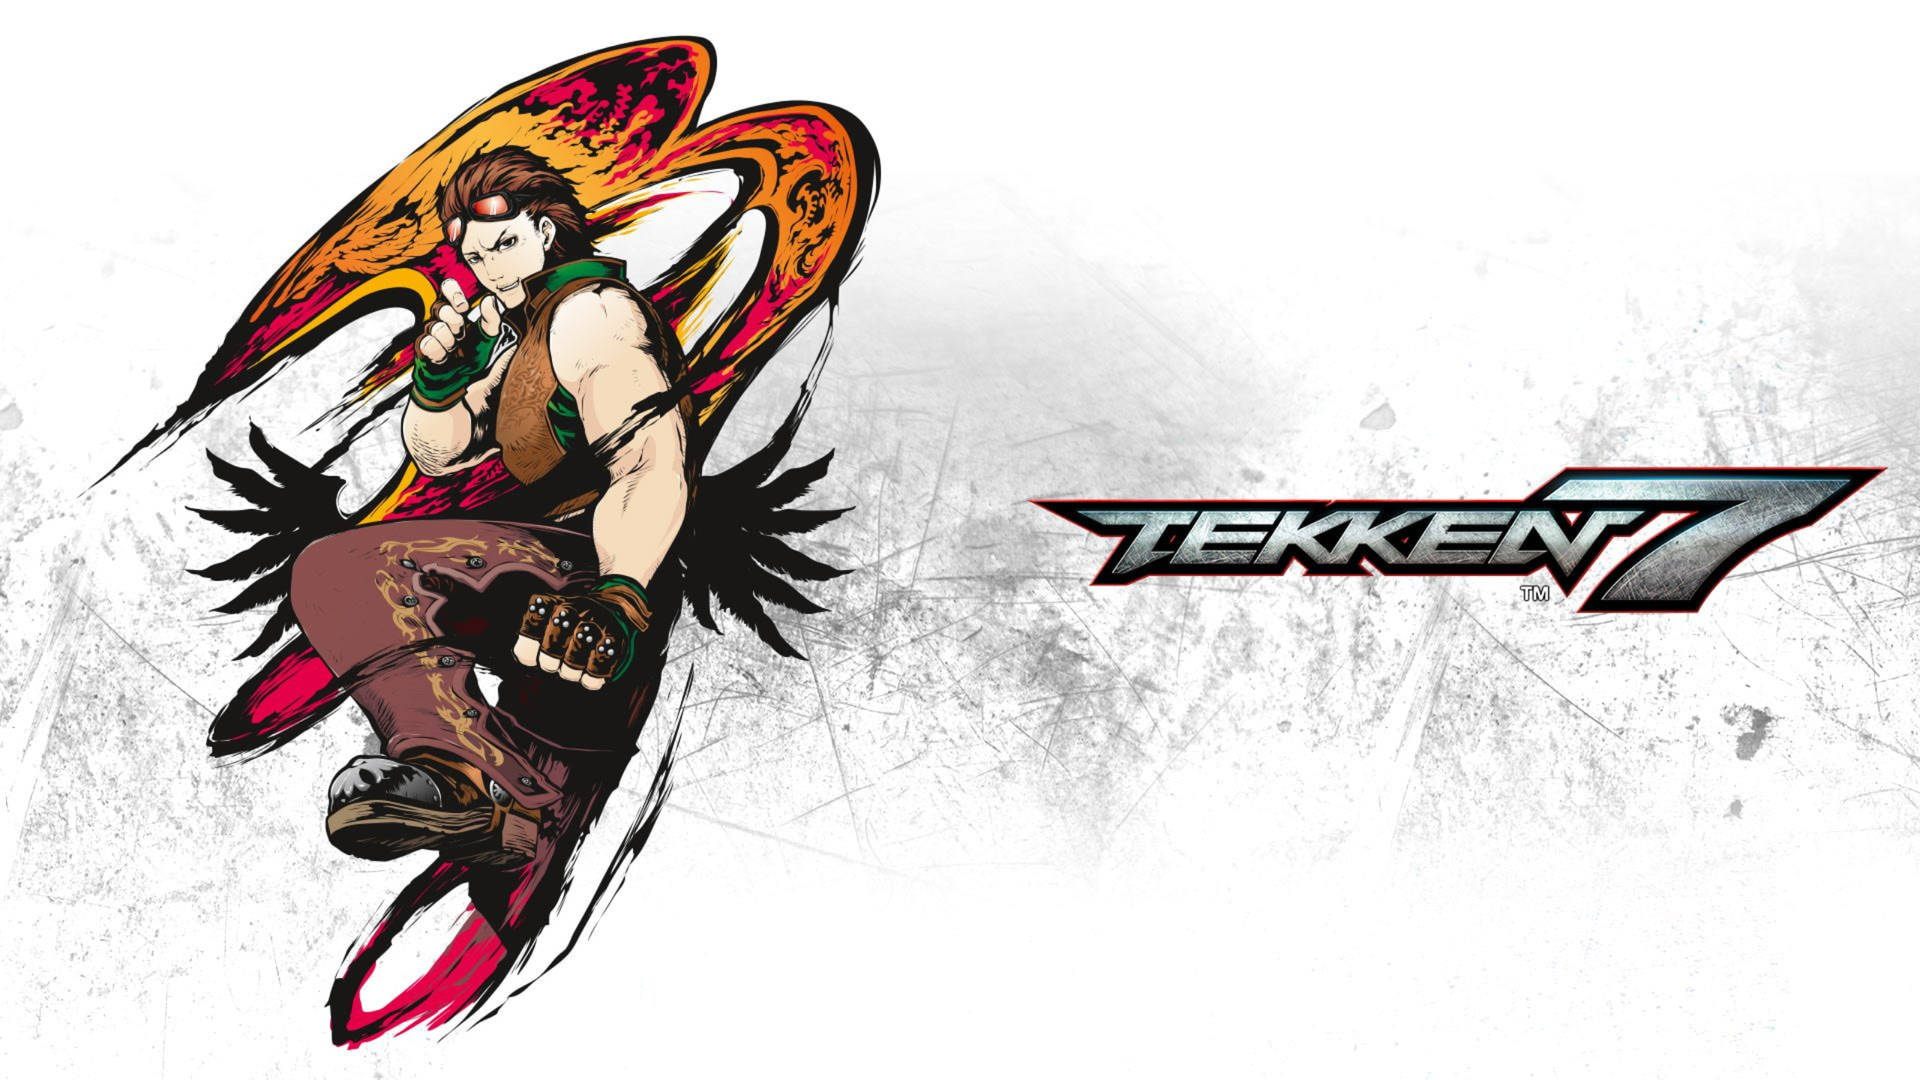 Hwoarang Tekken Cover Background